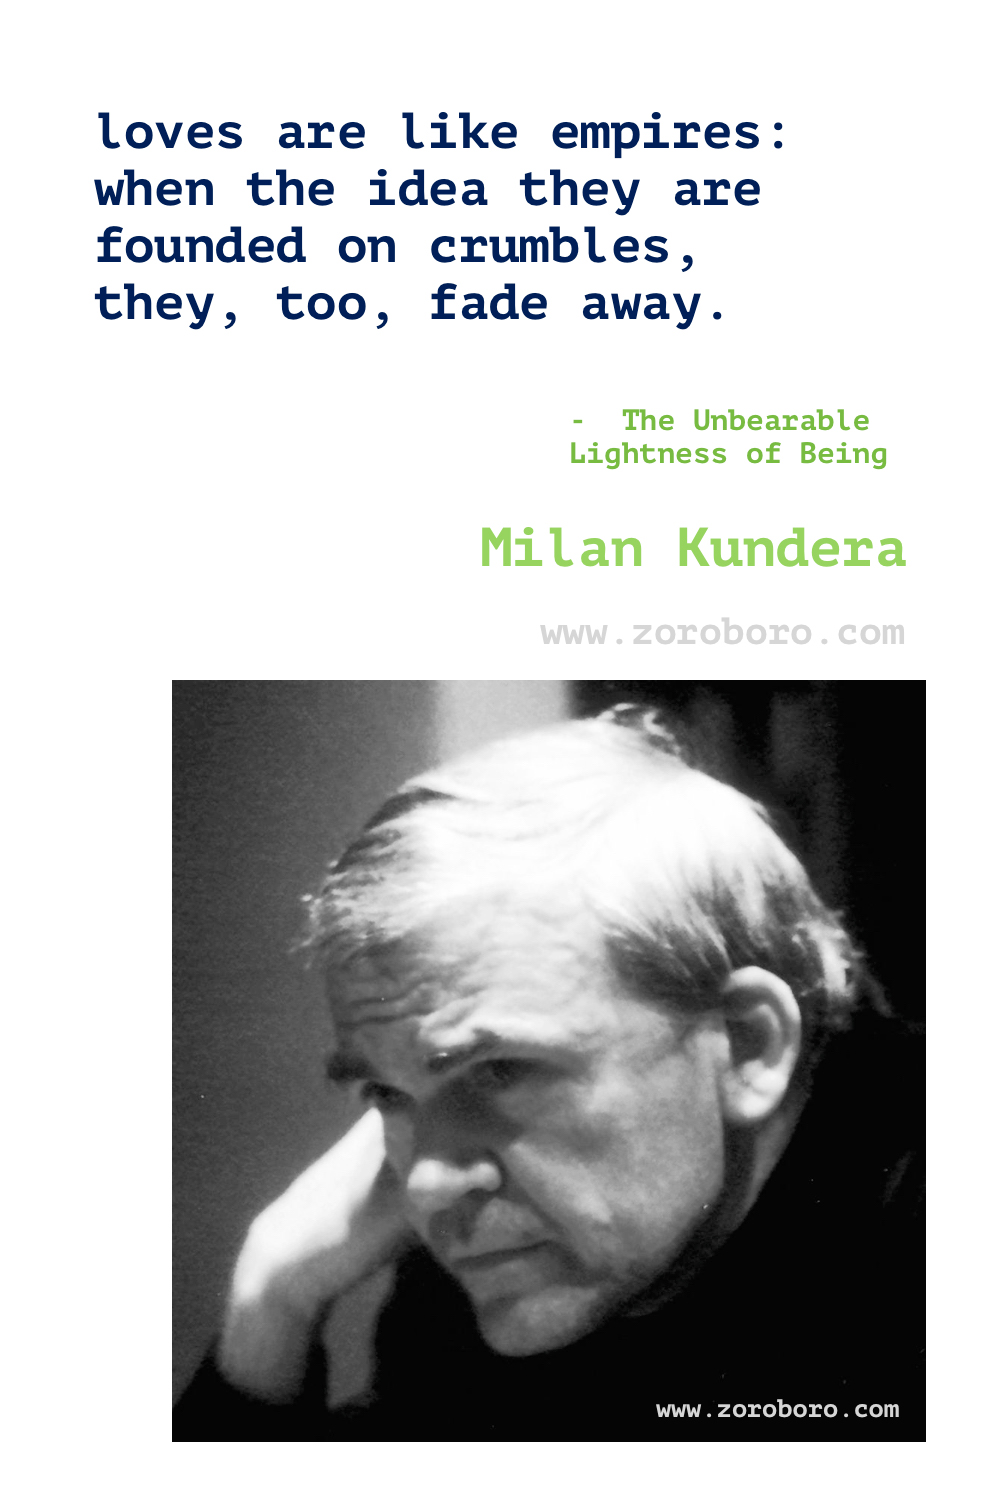 Milan Kundera Quotes. Milan Kundera books, Milan Kundera The unbearable lightness of being Quotes, Milan Kundera the book of laughter and forgetting Quotes, Milan Kundera The Joke, Slowness, immortality Quotes. Milan Kundera Books Quotes. Milan Kundera